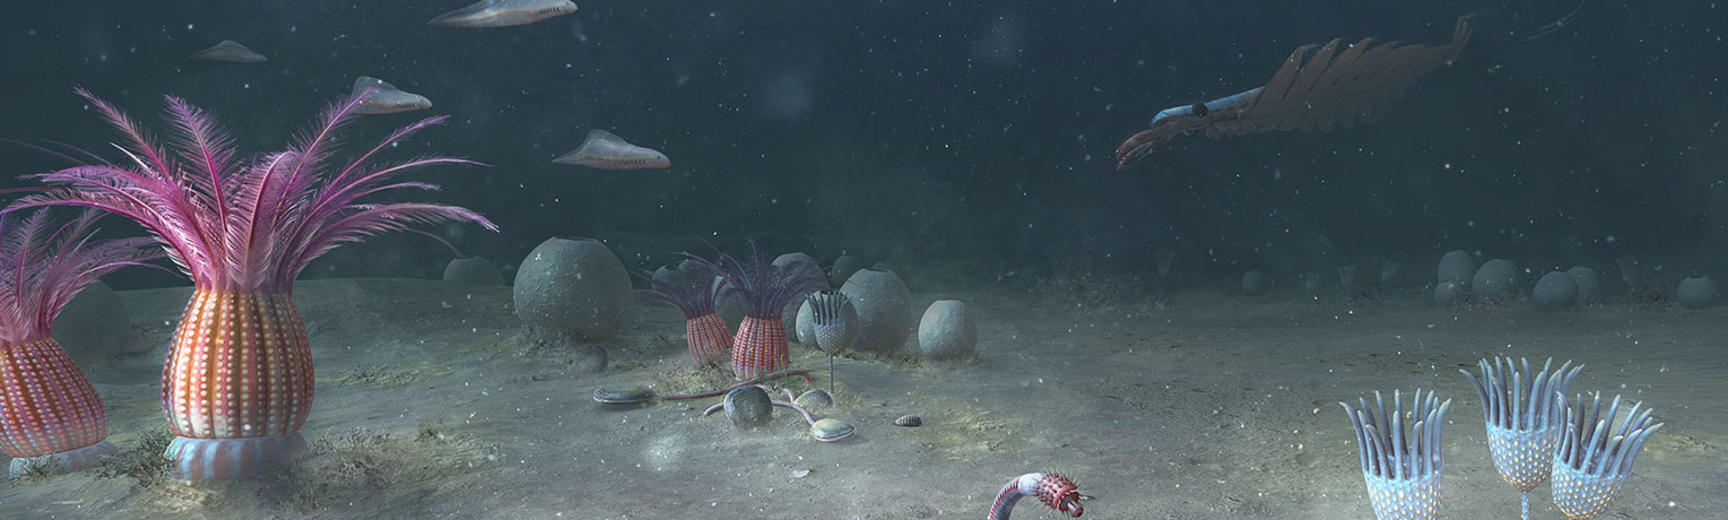 Artist's impression of an Ediacaran sea floor from over 500 million years ago.